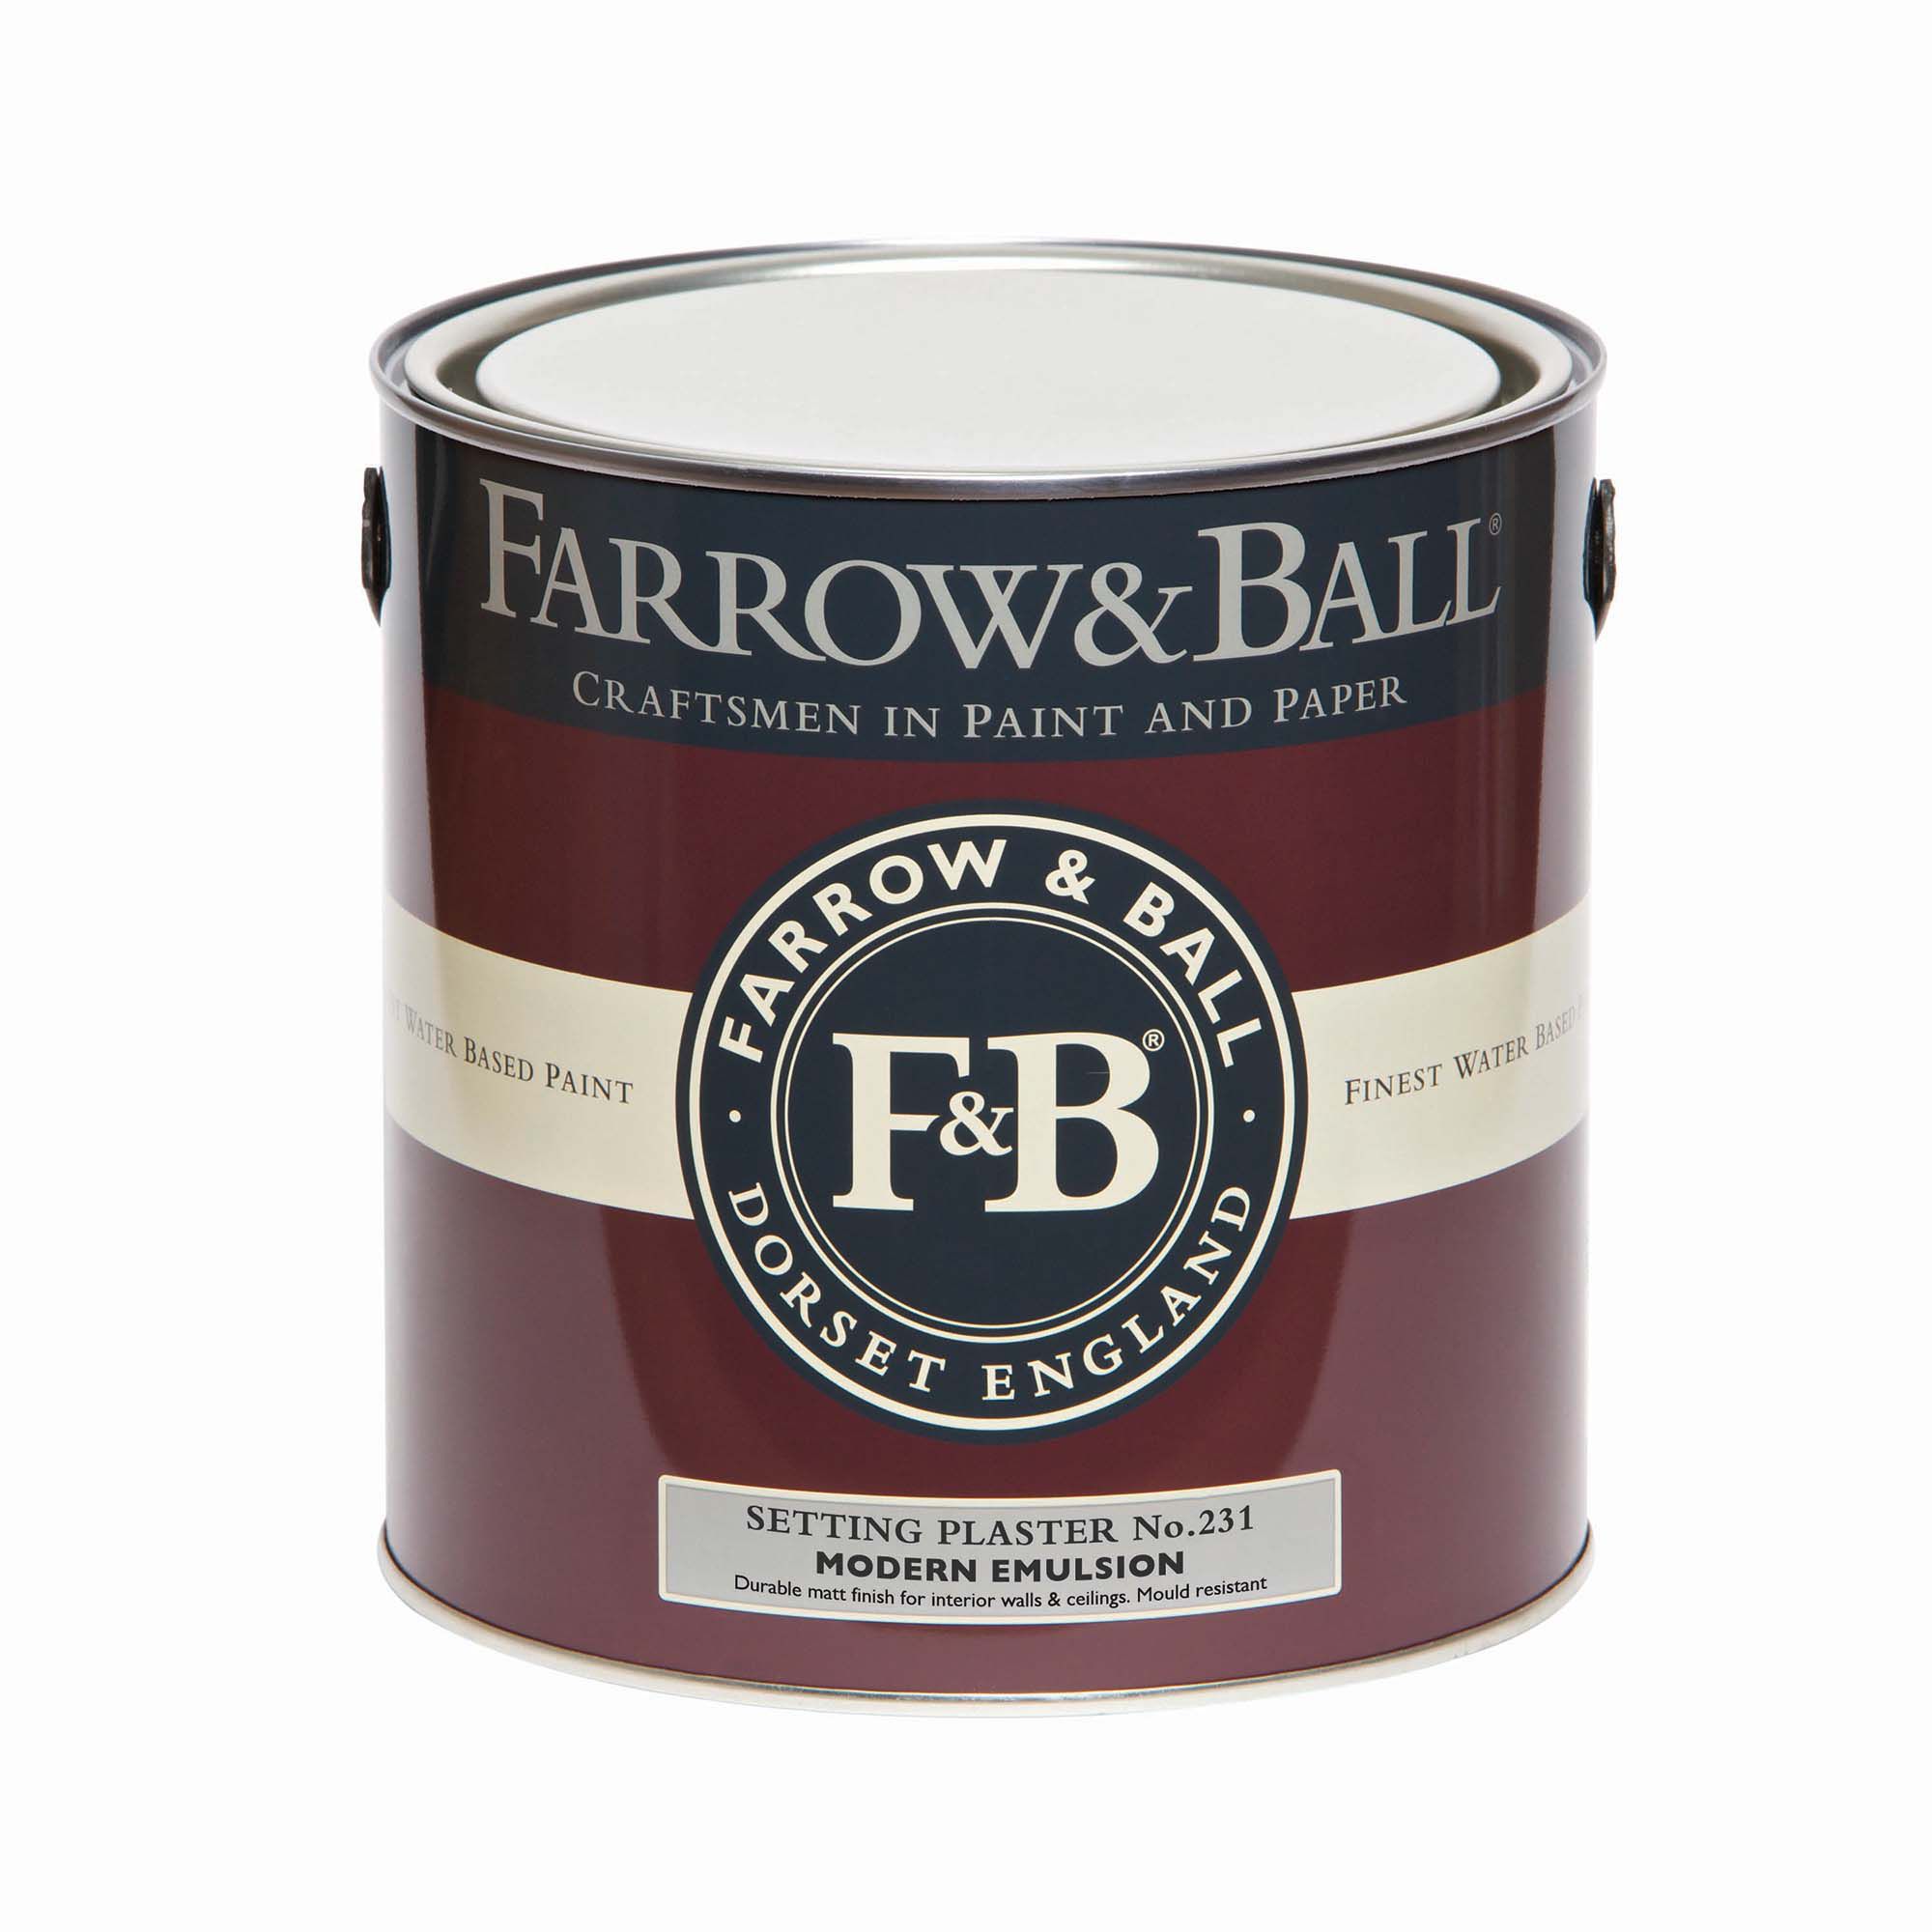 Farrow & Ball Modern Setting Plaster No.231 Matt Emulsion paint, 2.5L